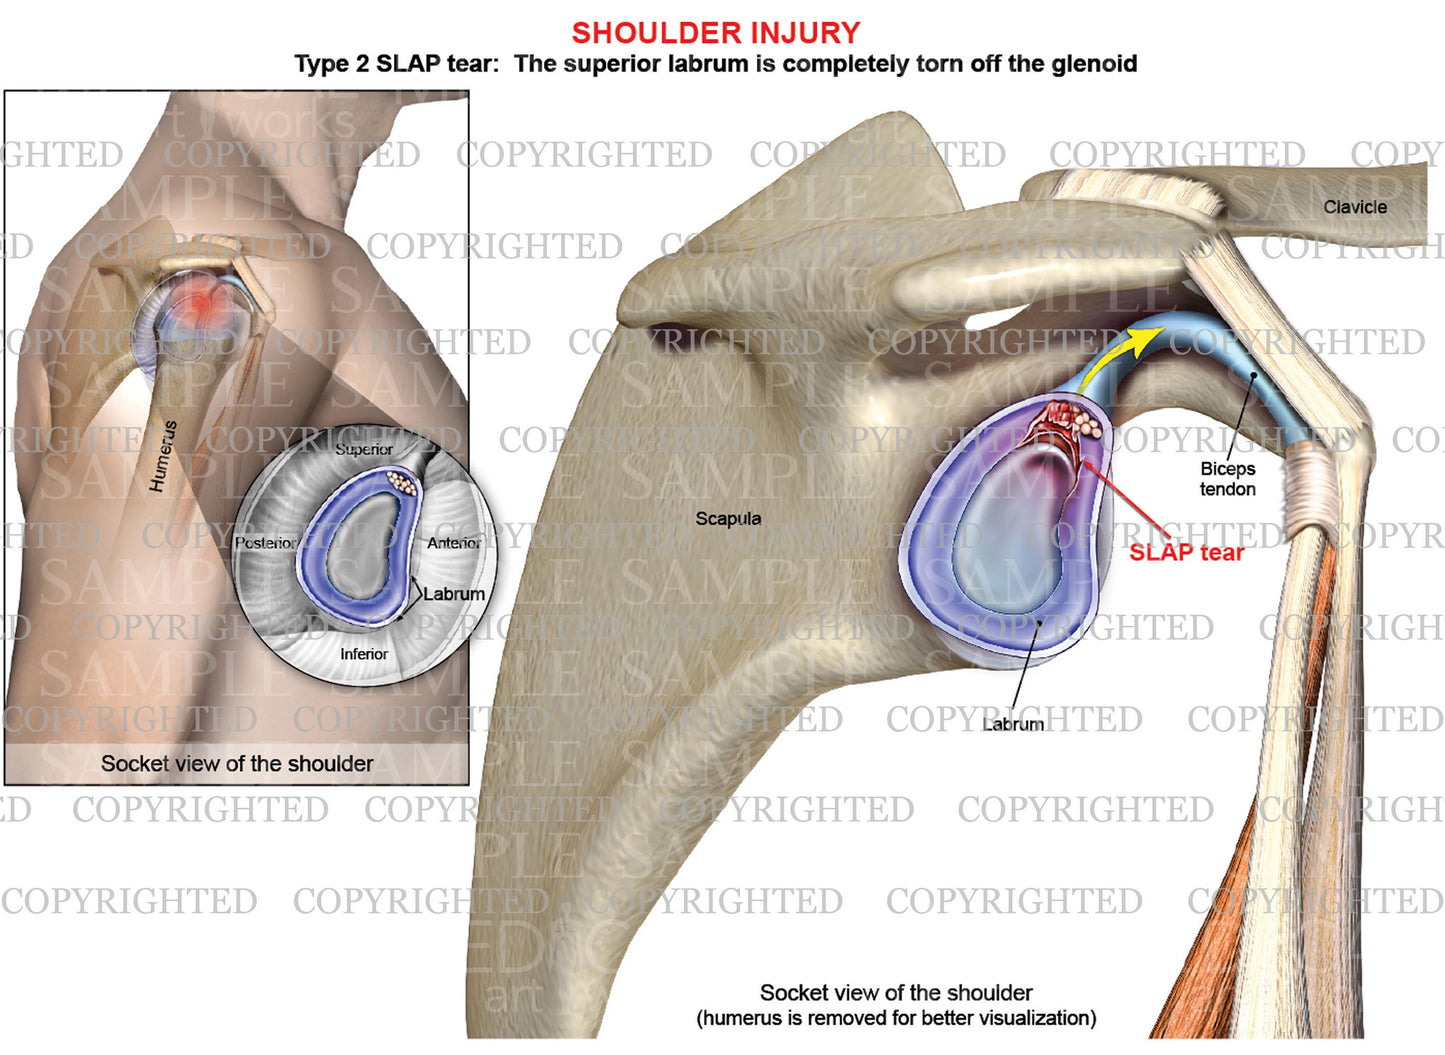 Type 2 SLAP tear - Shoulder injury